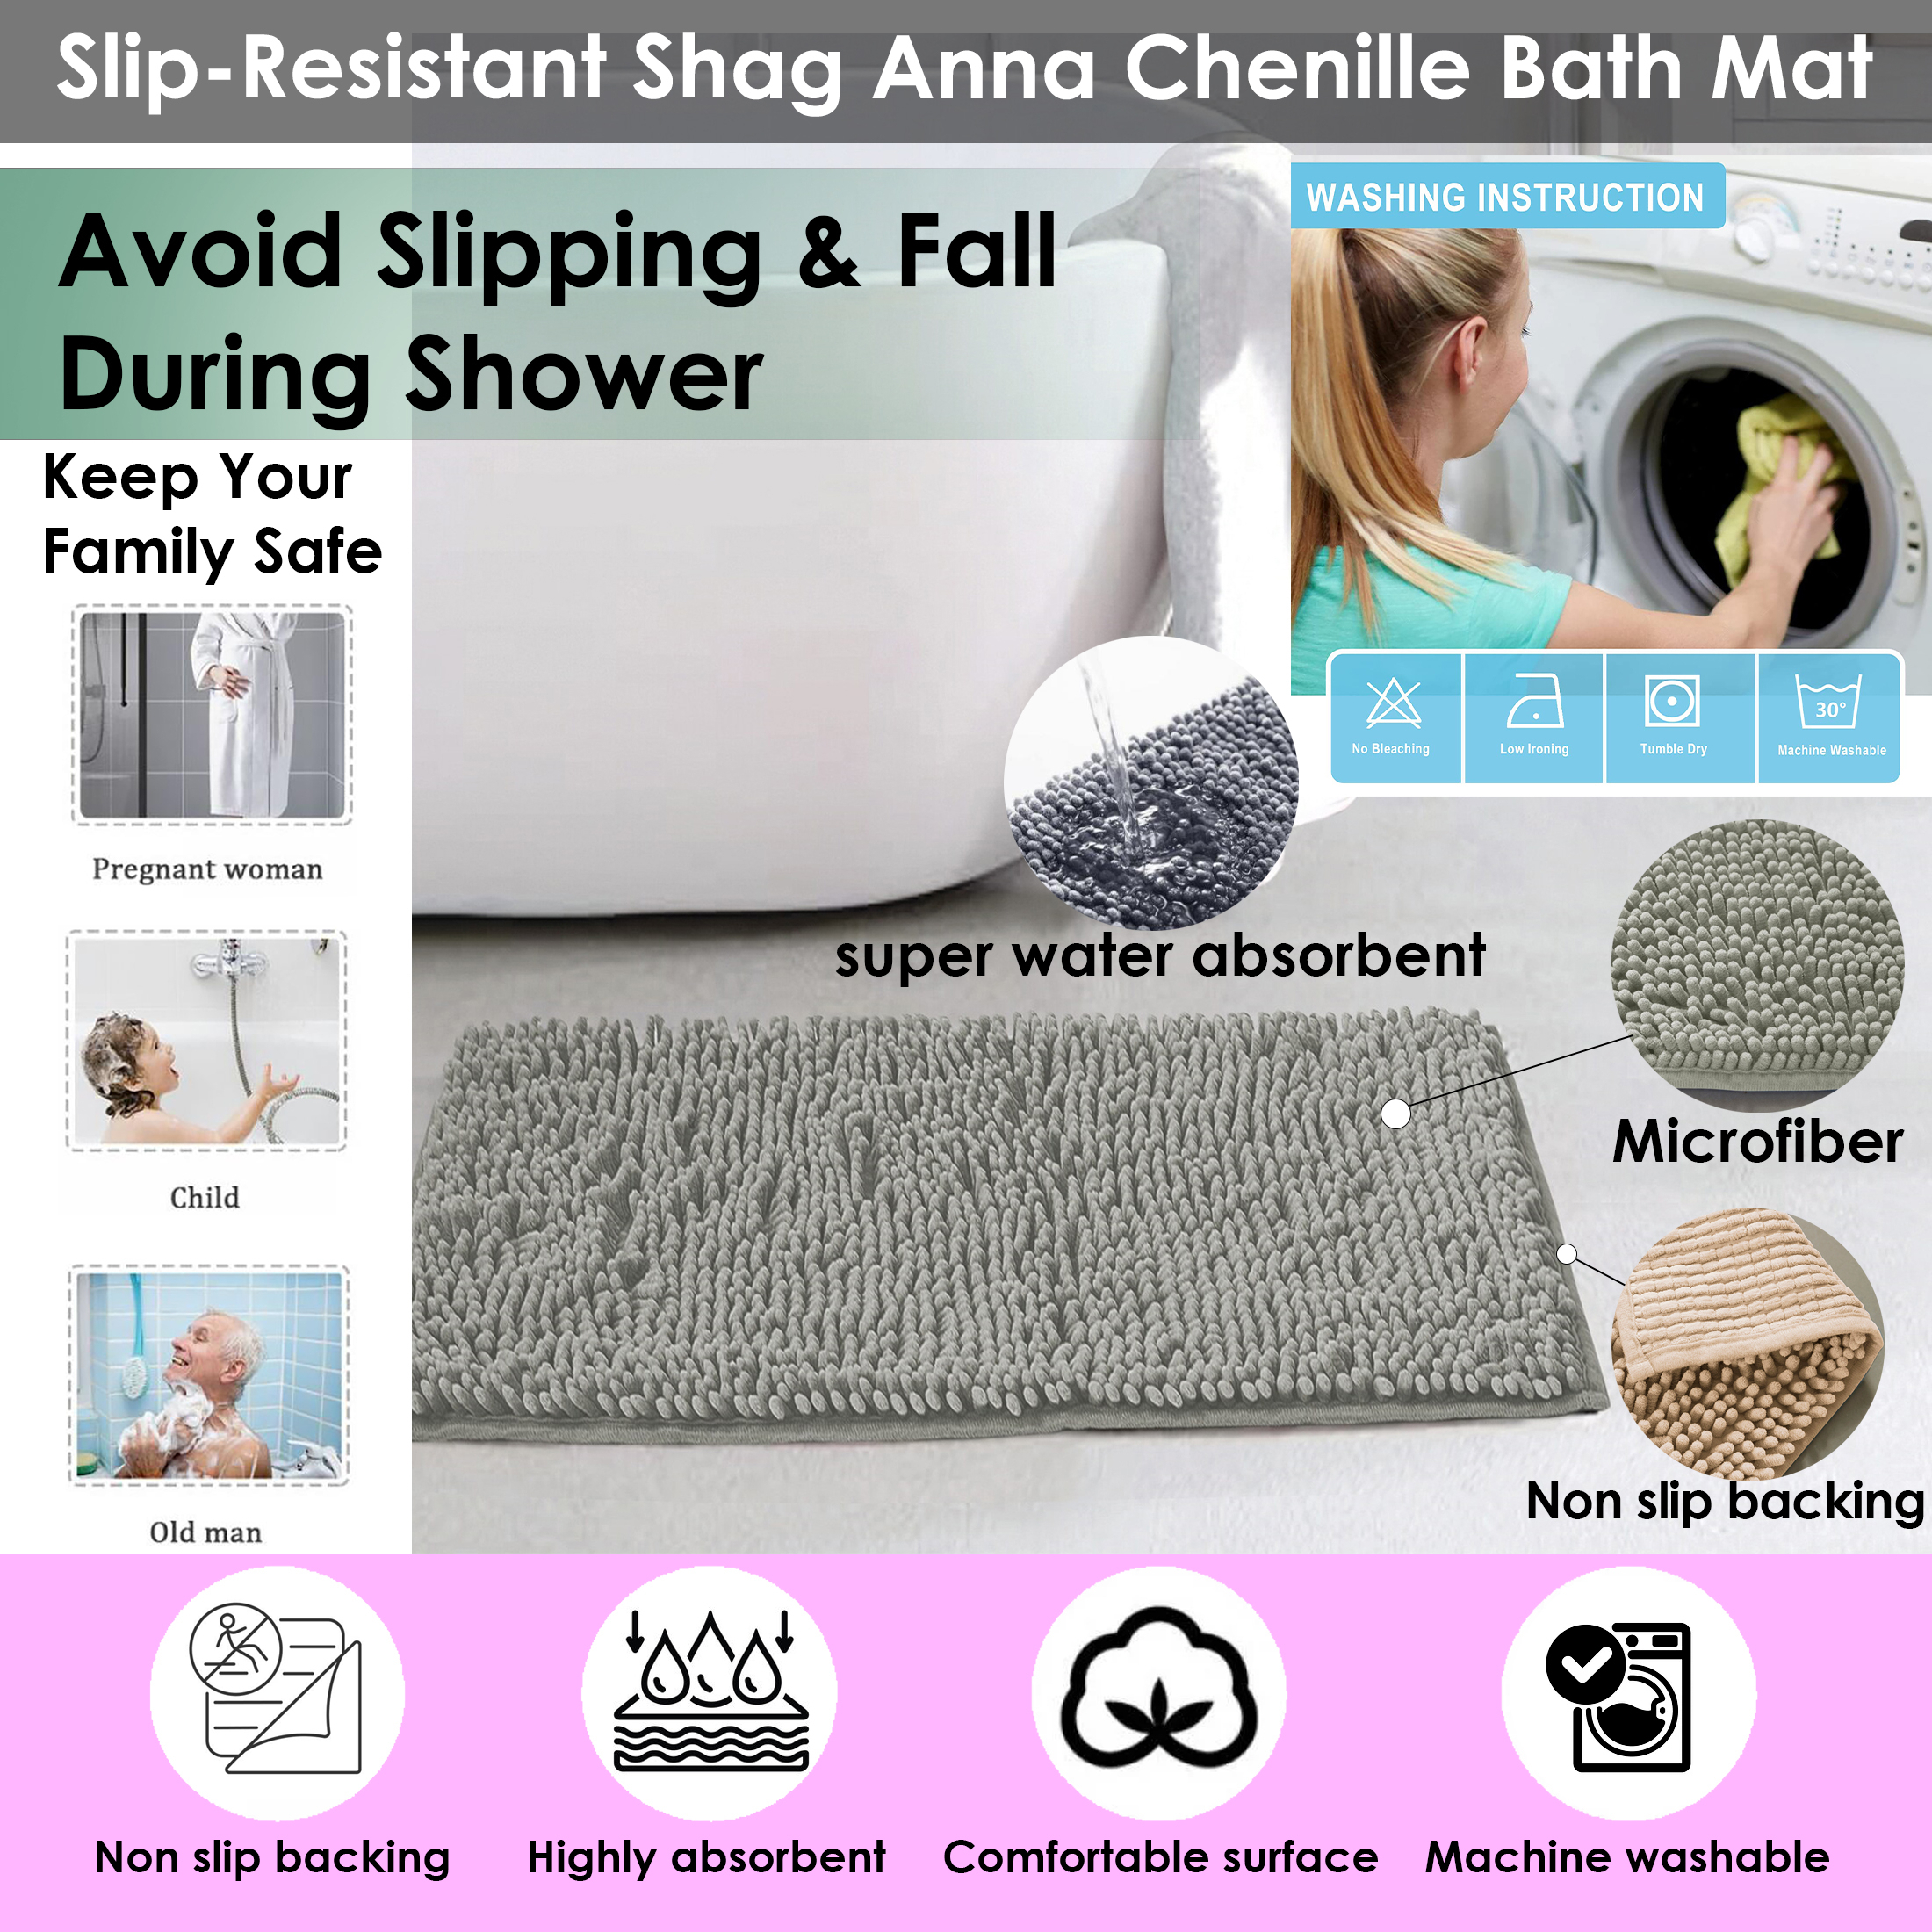 Slip-Resistant Shag Anna Chenille Soft Absorbent Bath Mat Bathroom Rug 17 X 24 - Black